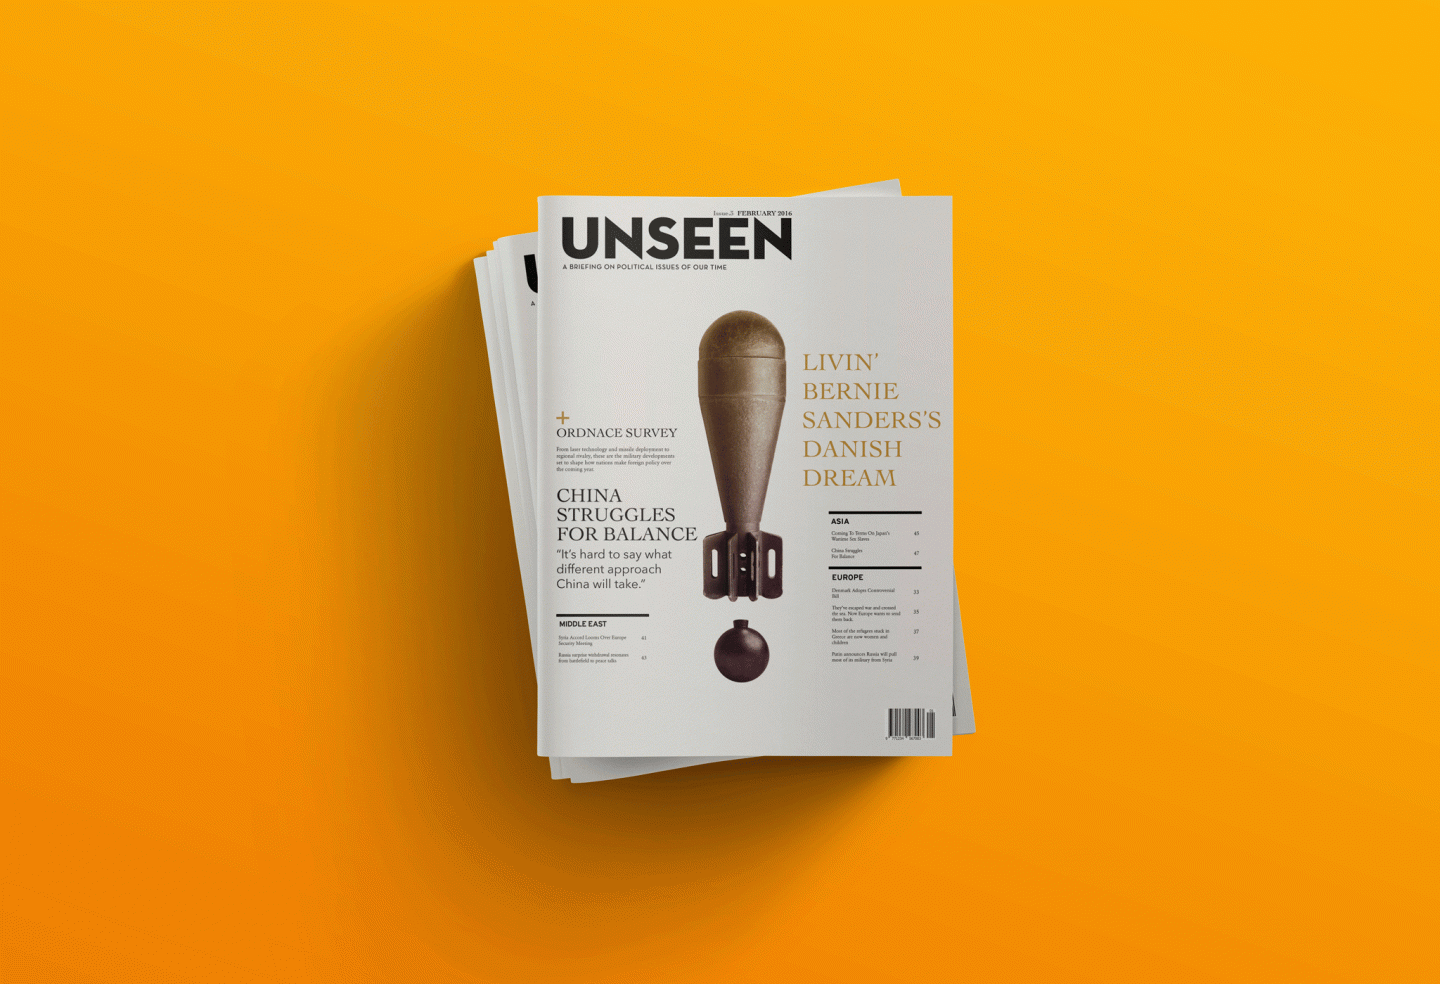 Unseen magazine